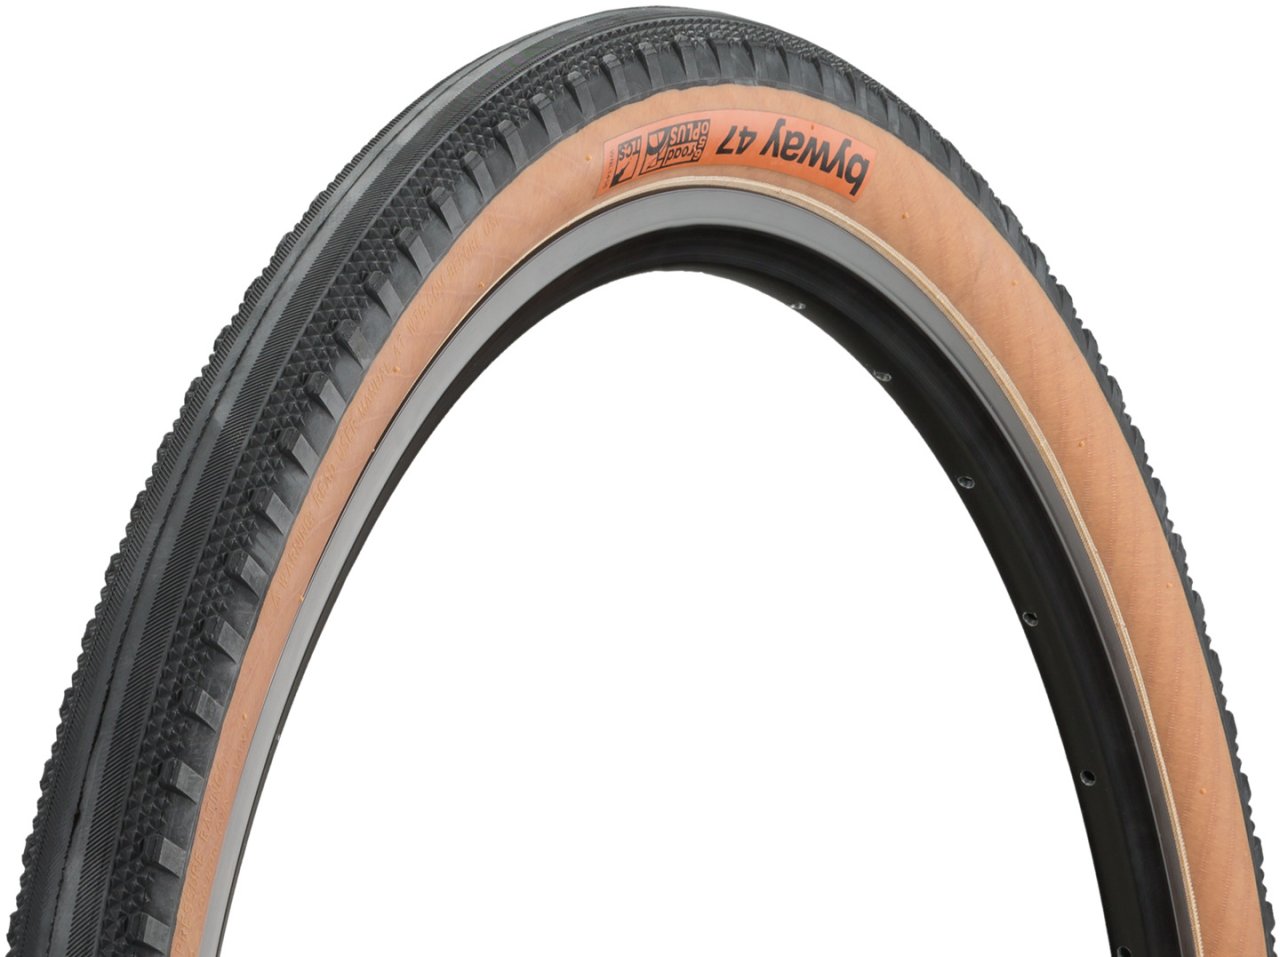 650b road tyre